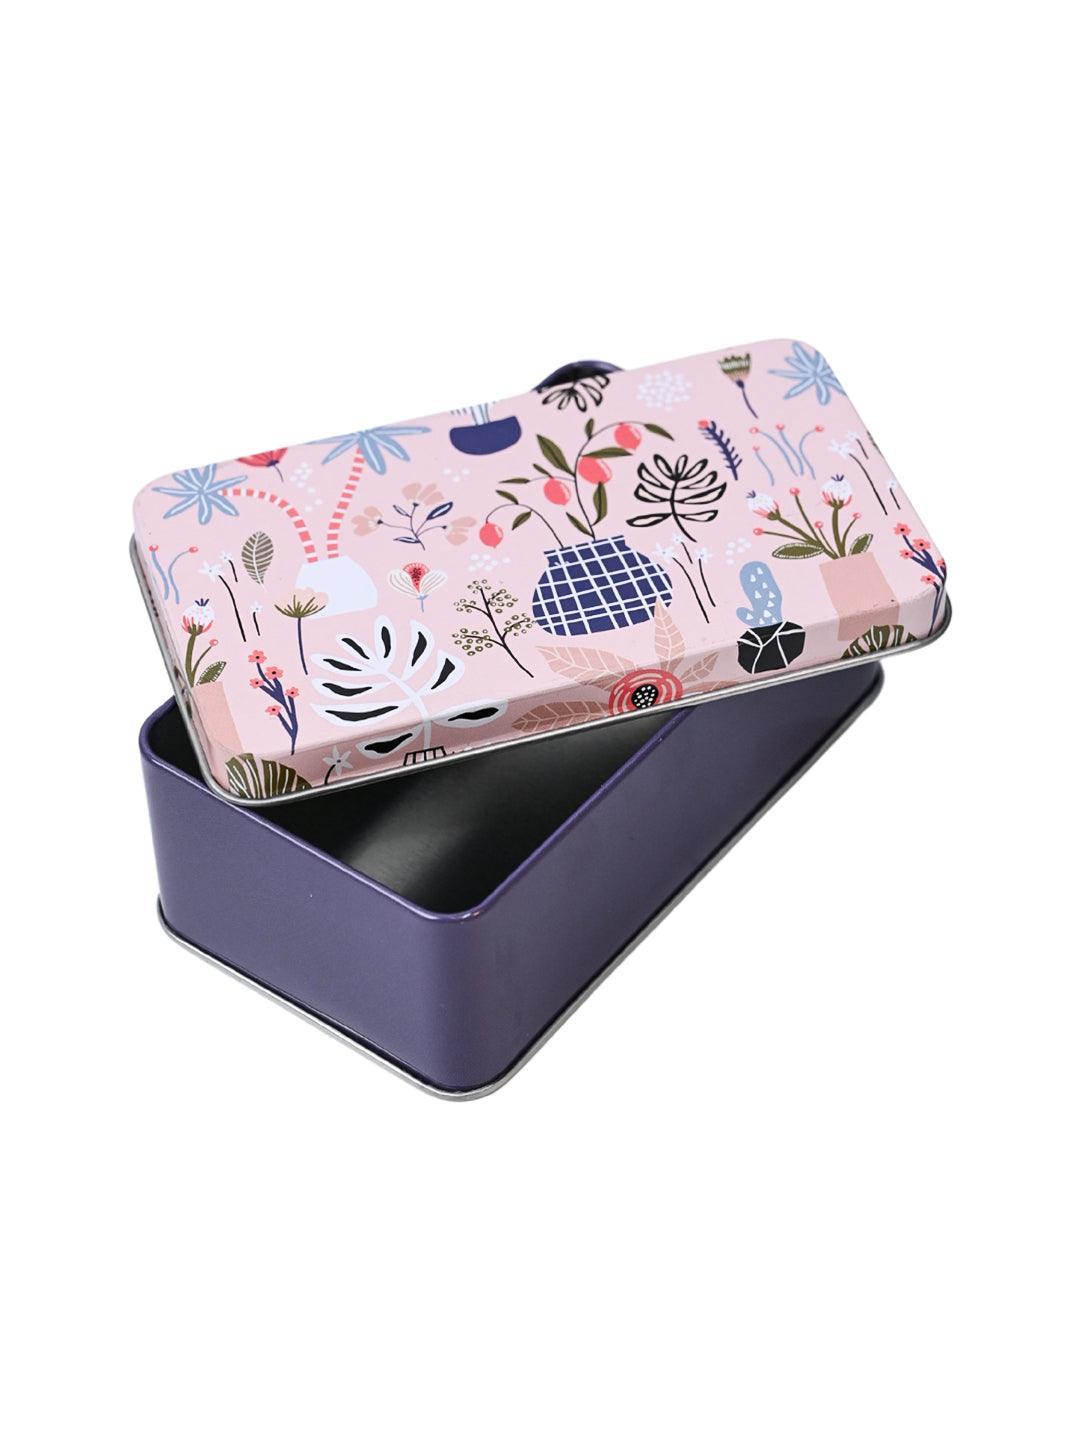 Floral Tin Storage Box - Set Of 3, Multi Color - MARKET99